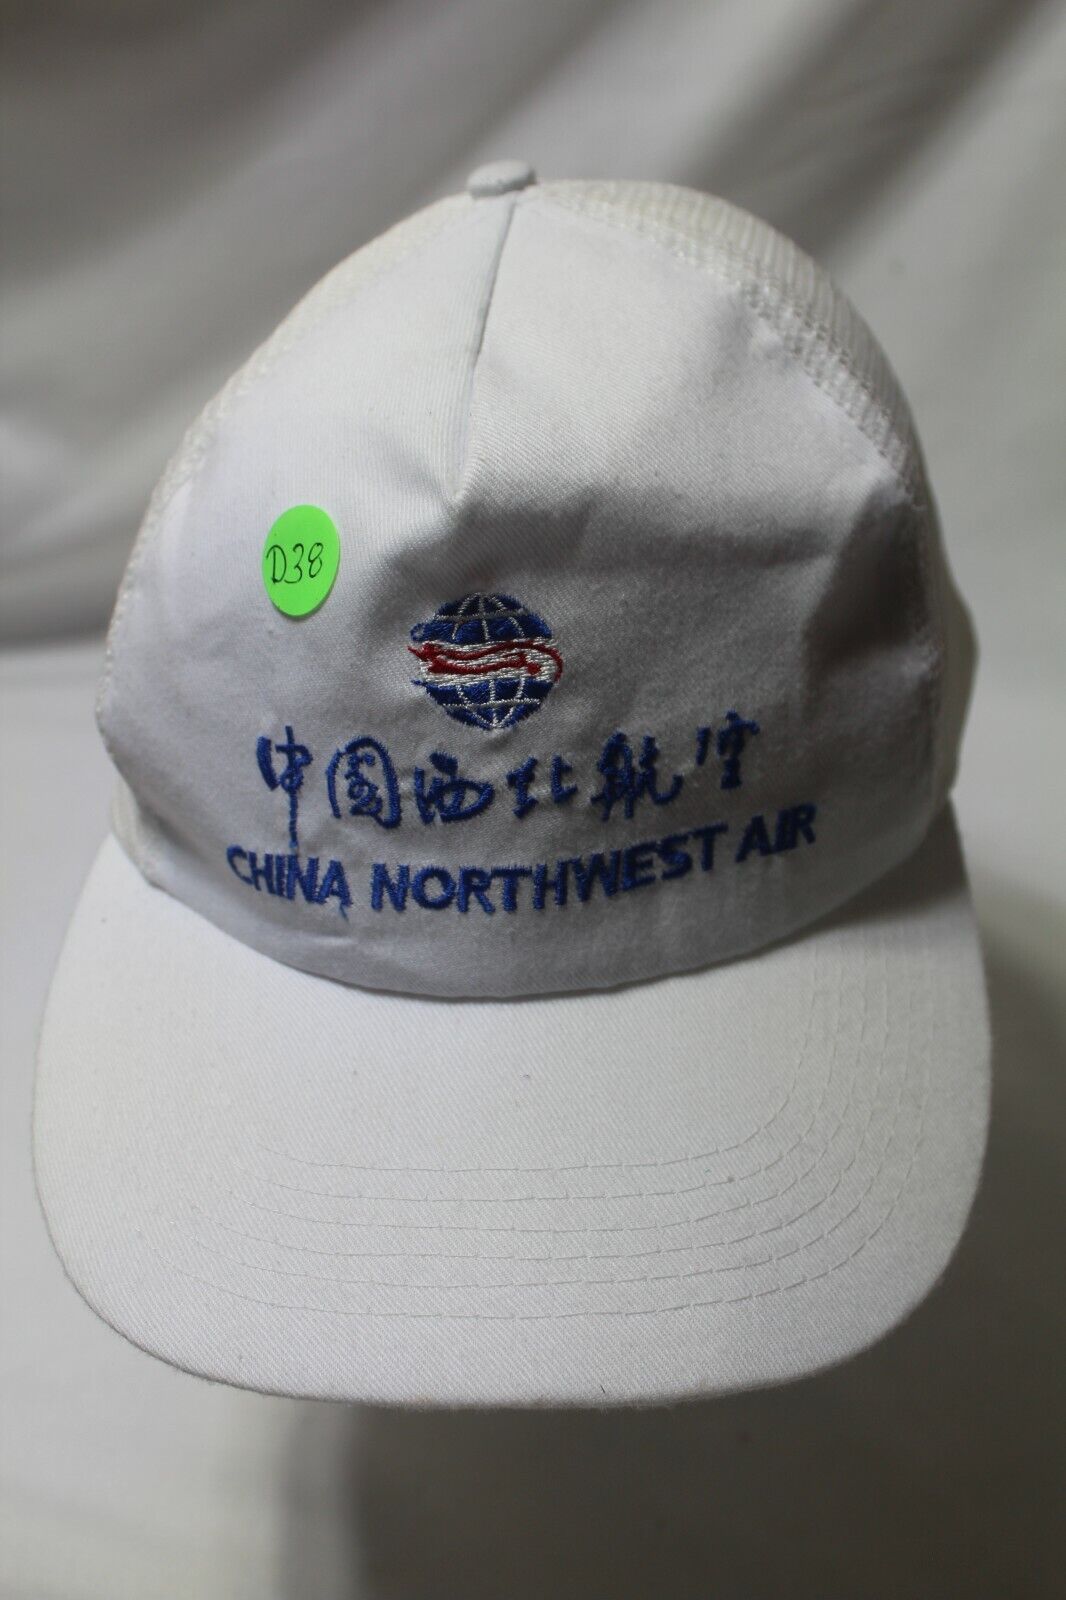  China Northwest Air White Ball Cap Hat Mesh Vintage Snapback